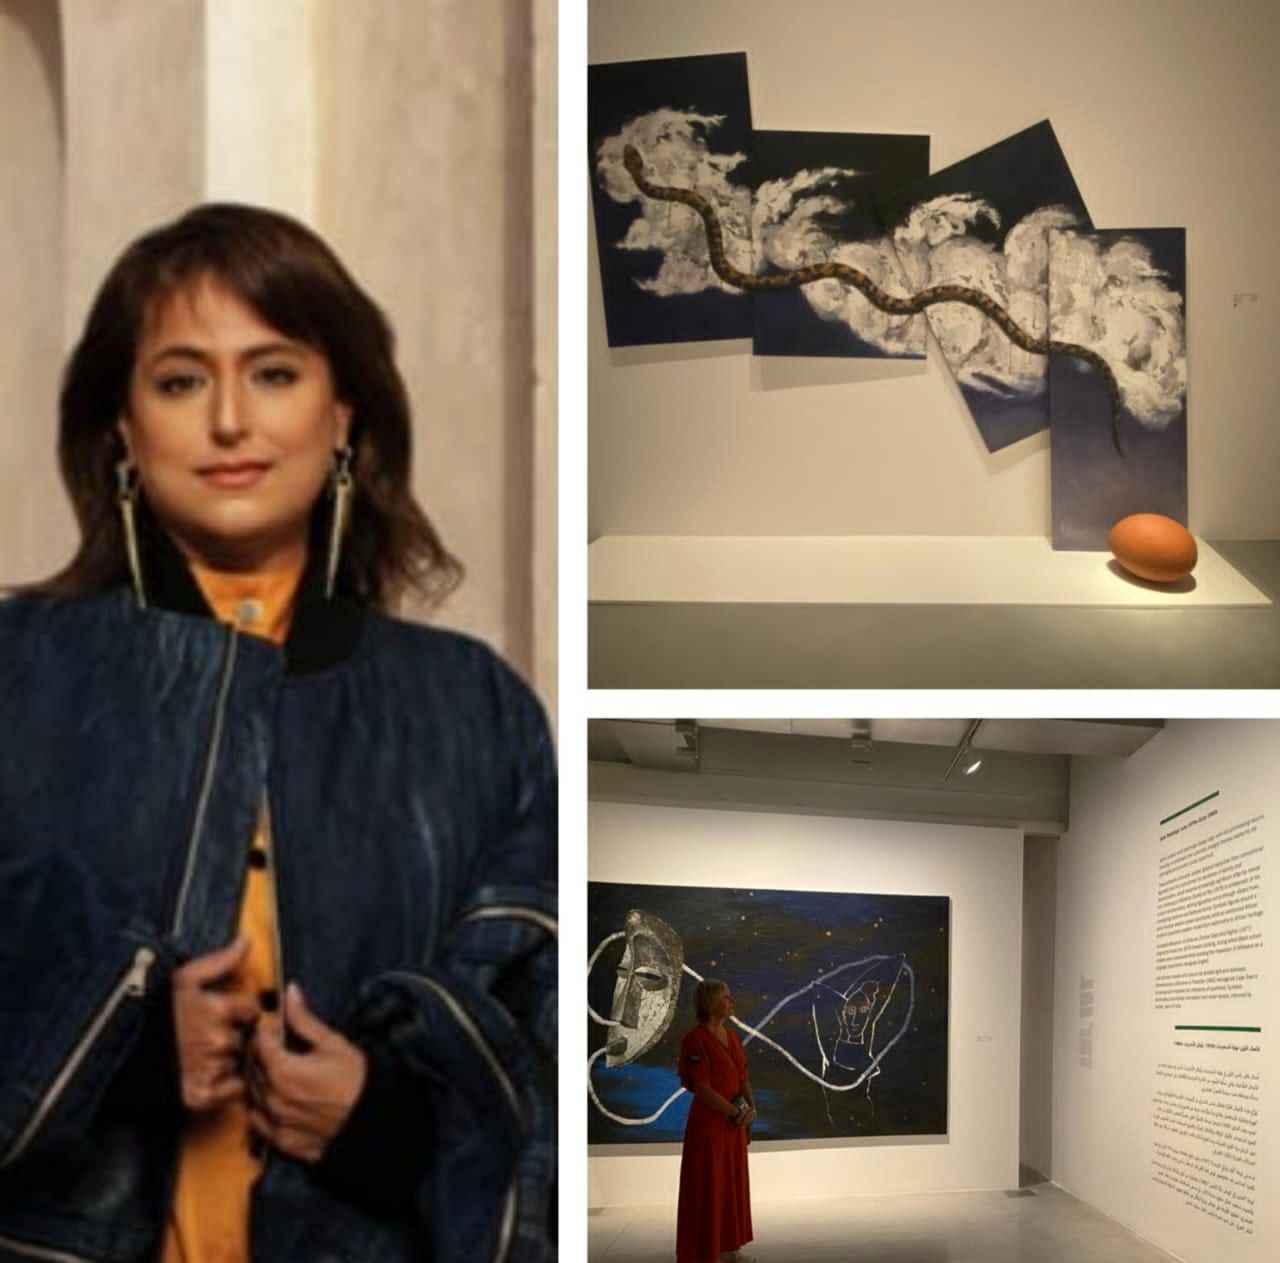 Sheikha Hoor Al Qasimi wrote about the Gavin Jantjes exhibition at Sharjah Art Foundation